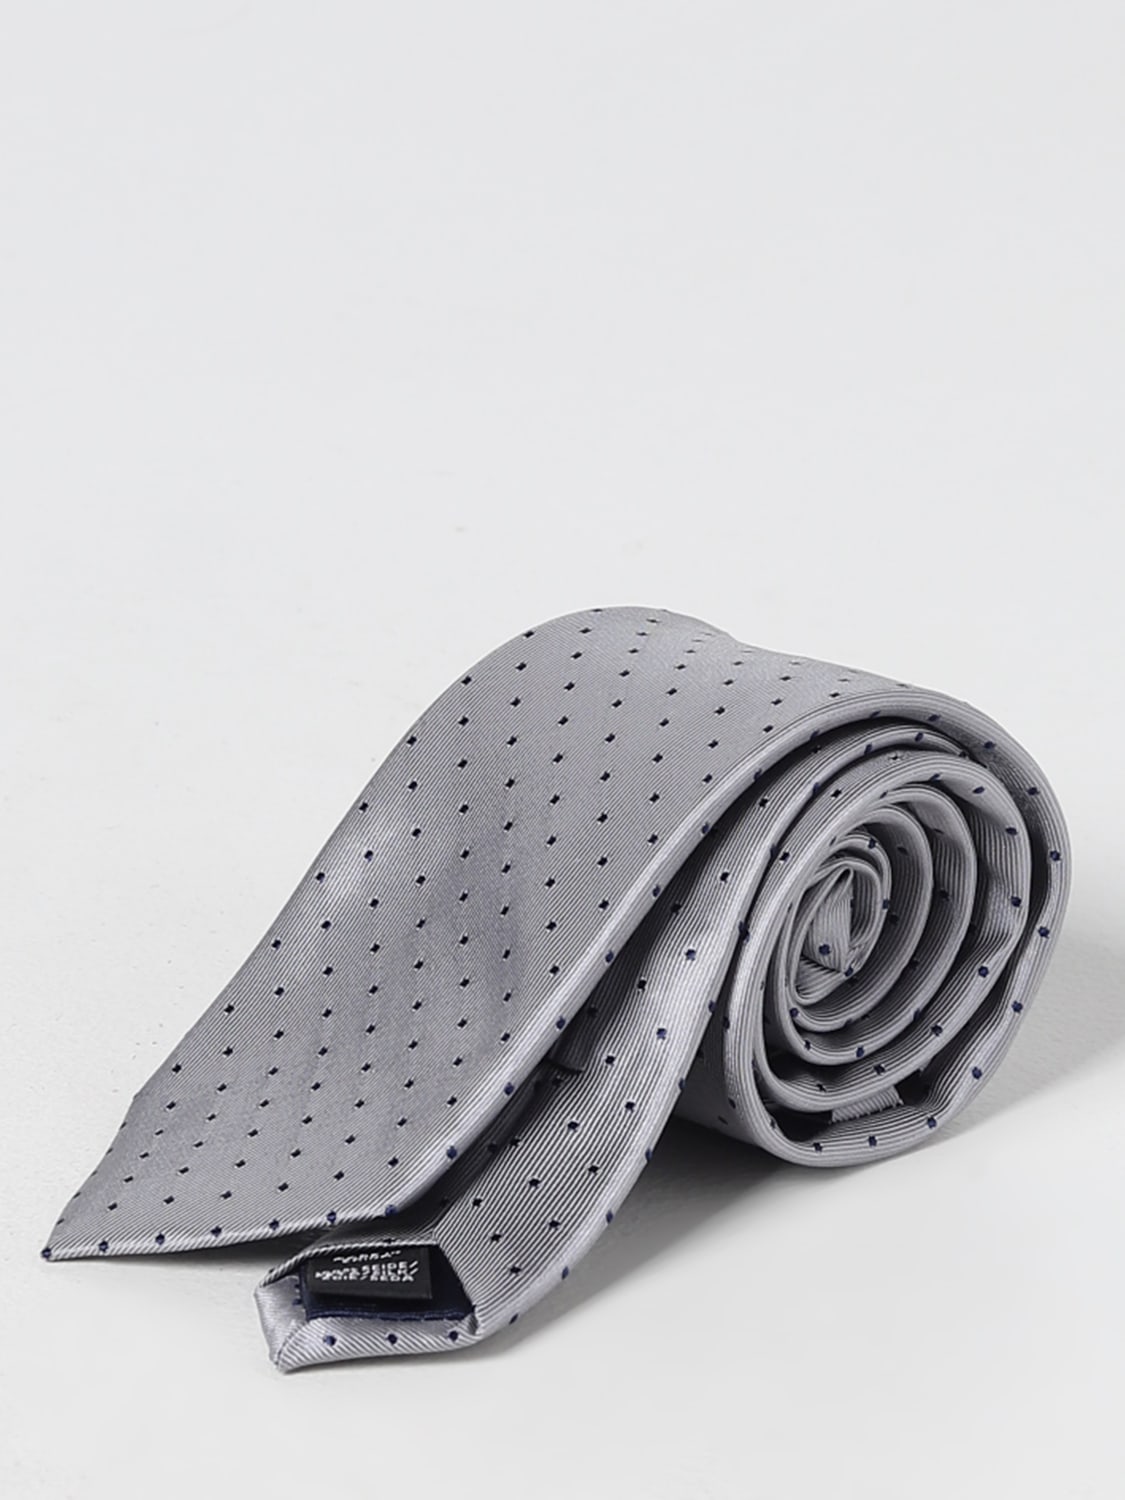 Inflar prosa marzo MICHAEL KORS: tie for man - Grey | Michael Kors tie MK0DT00013 online on  GIGLIO.COM